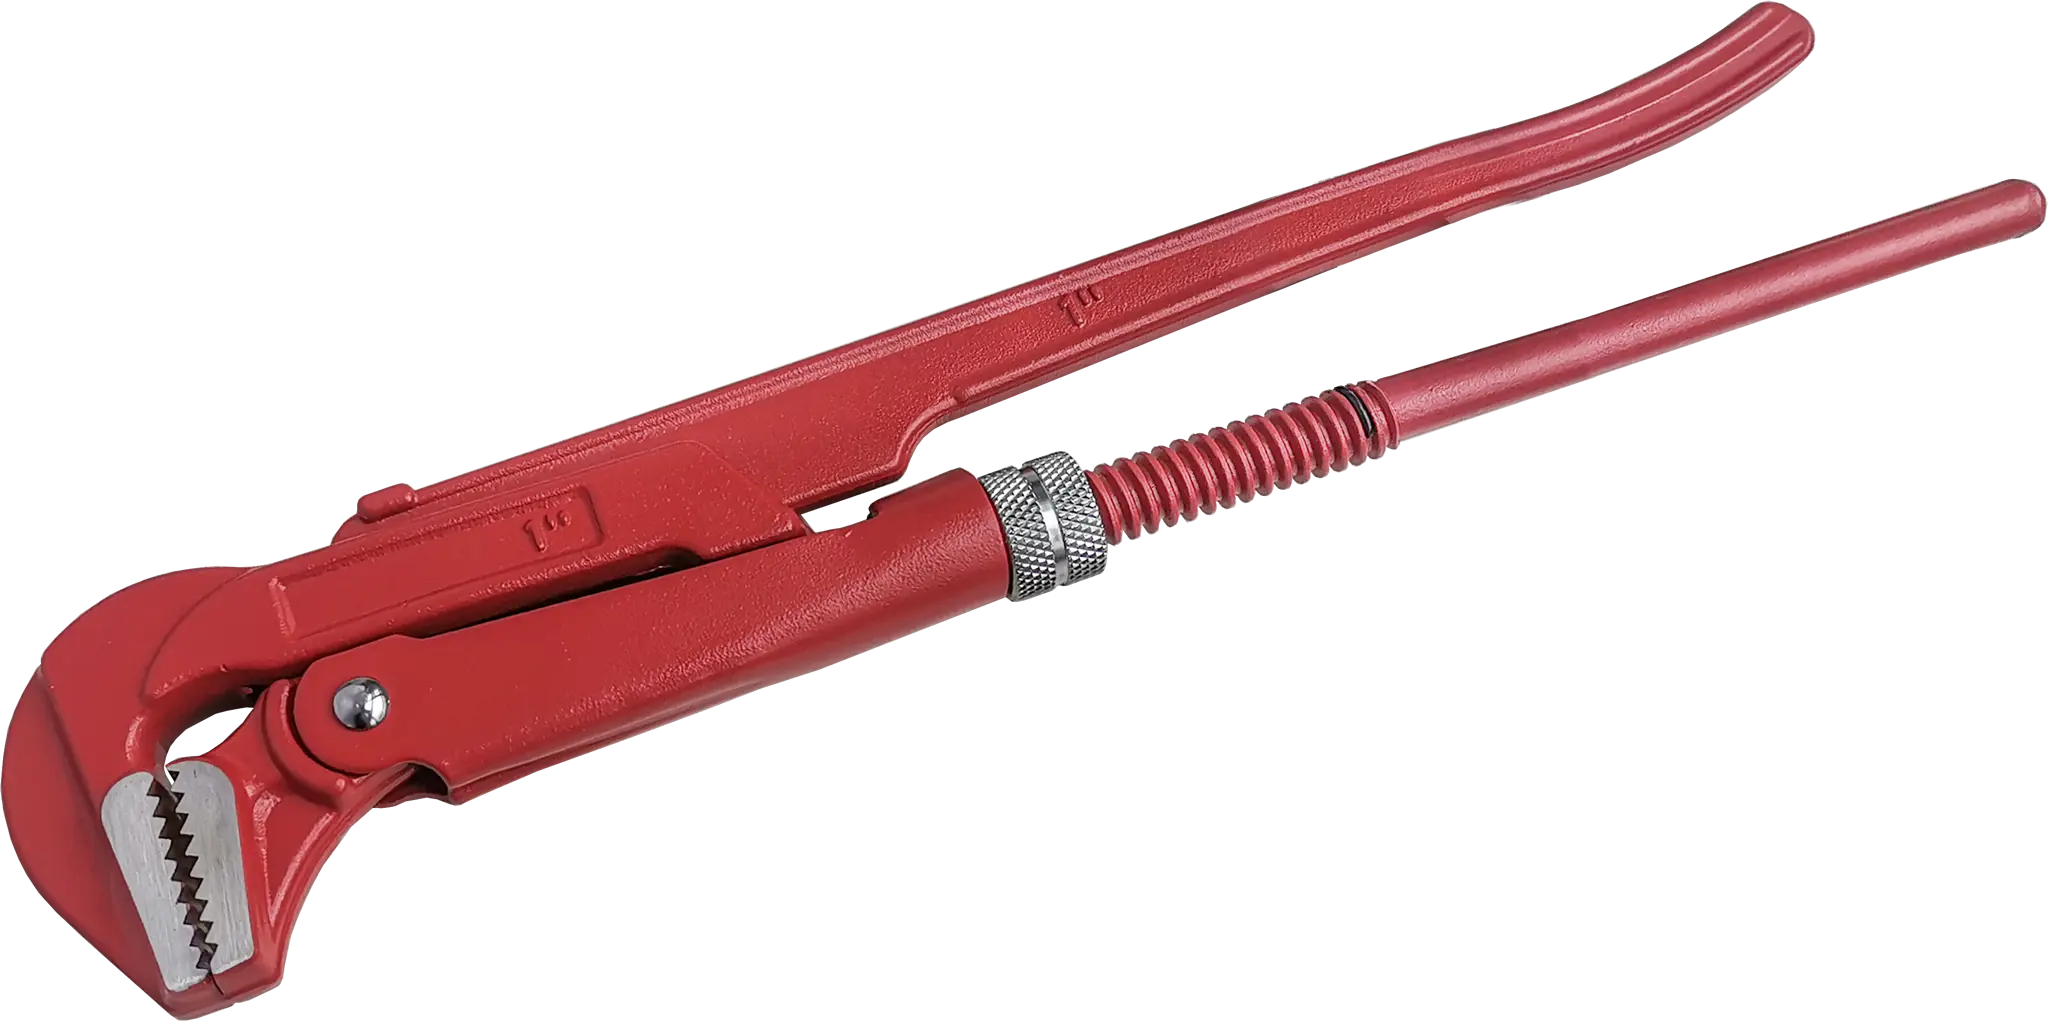 Ключ трубный газовый рычажный КТР-1 захват 25 мм, длина 320 мм трубный ключ с прямыми губками сибин 2 2730 2 1 5 445 мм